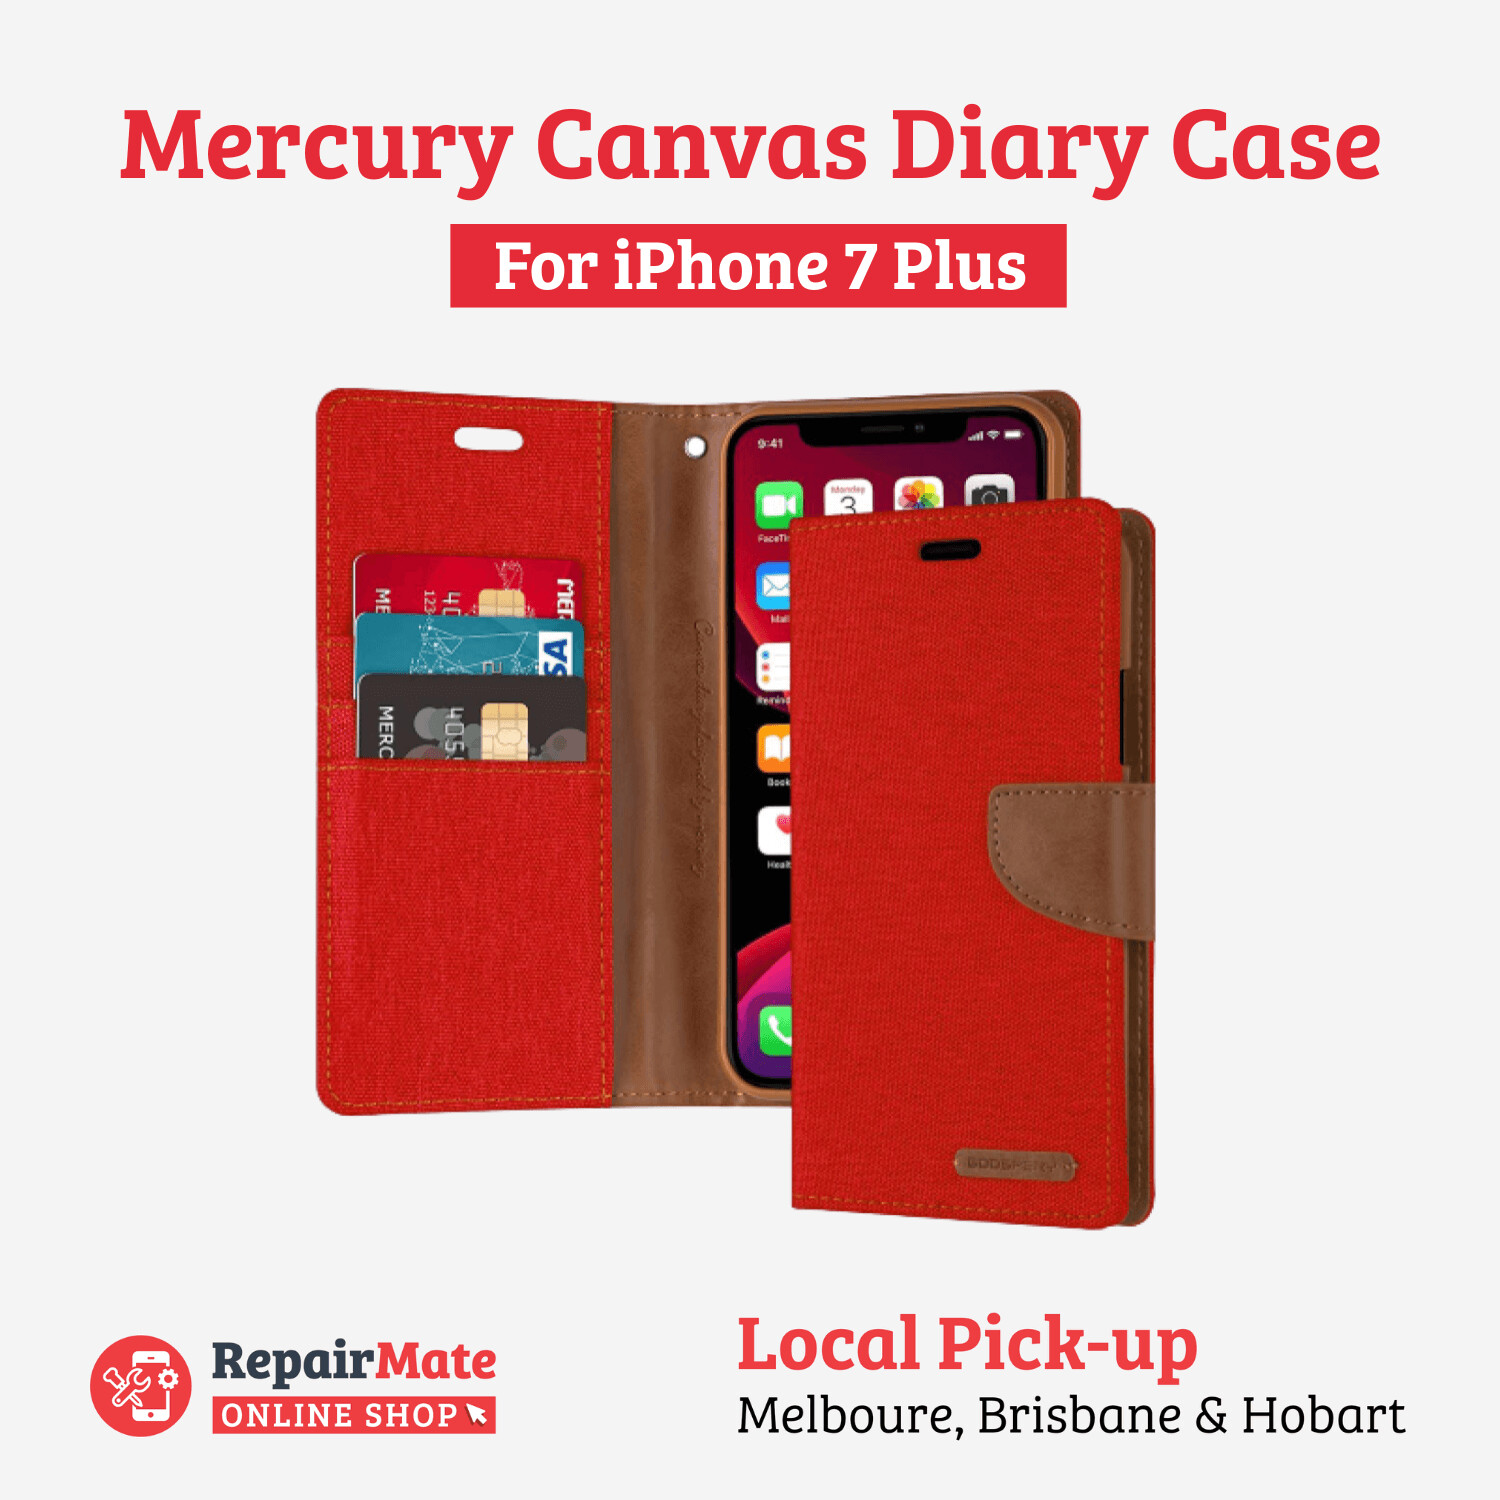 iPhone 7 Plus Mercury Canvas Foldable Diary Case